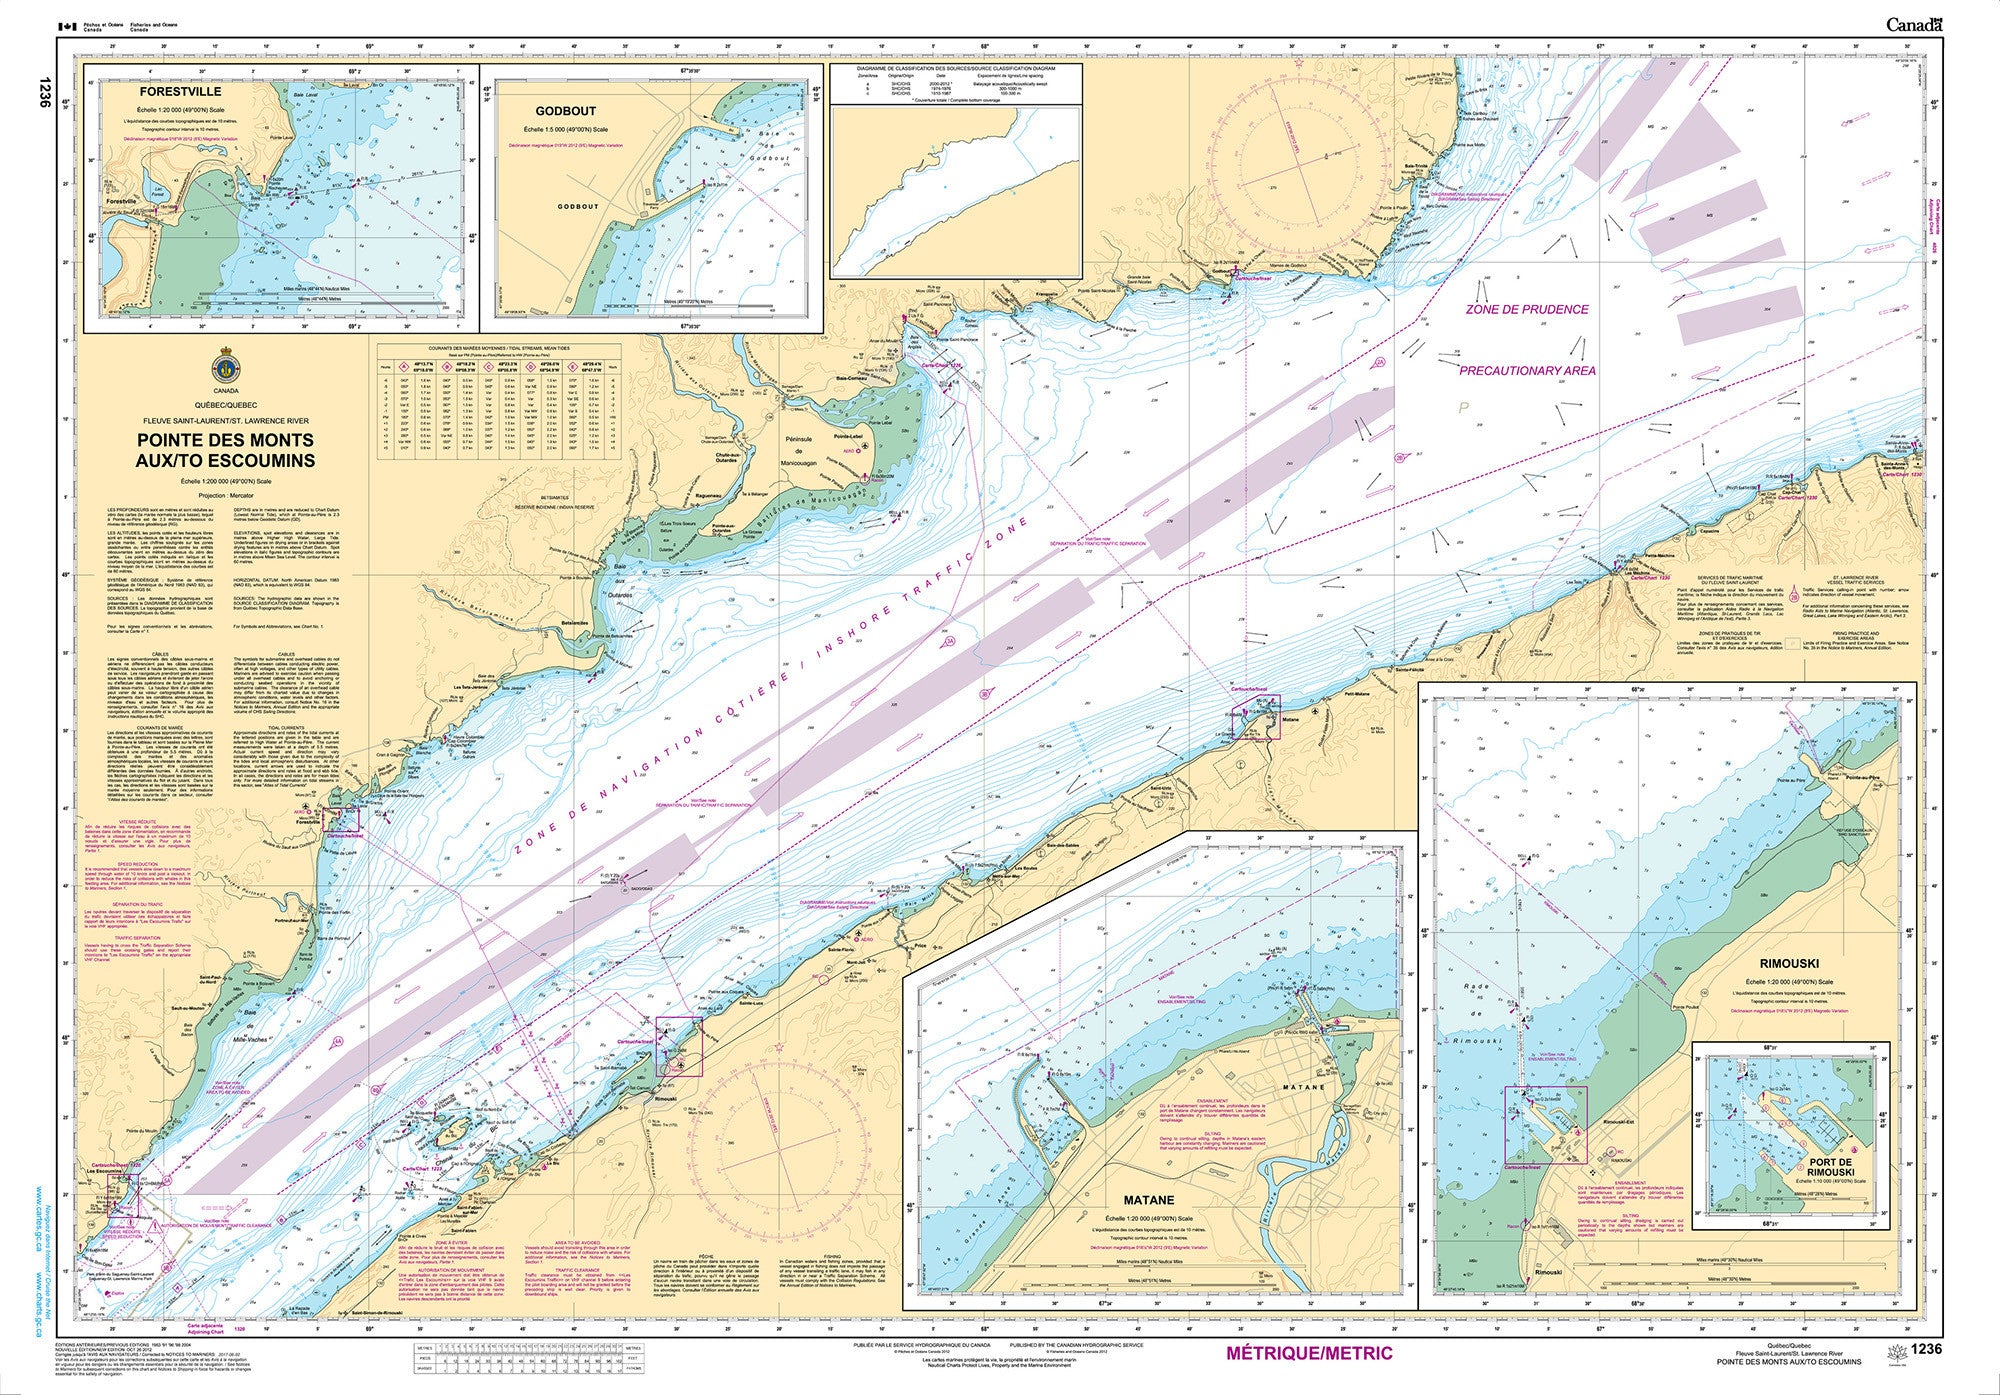 Canadian Hydrographic Service Nautical Chart CHS1236: Pointe des Monts aux/to Escoumins